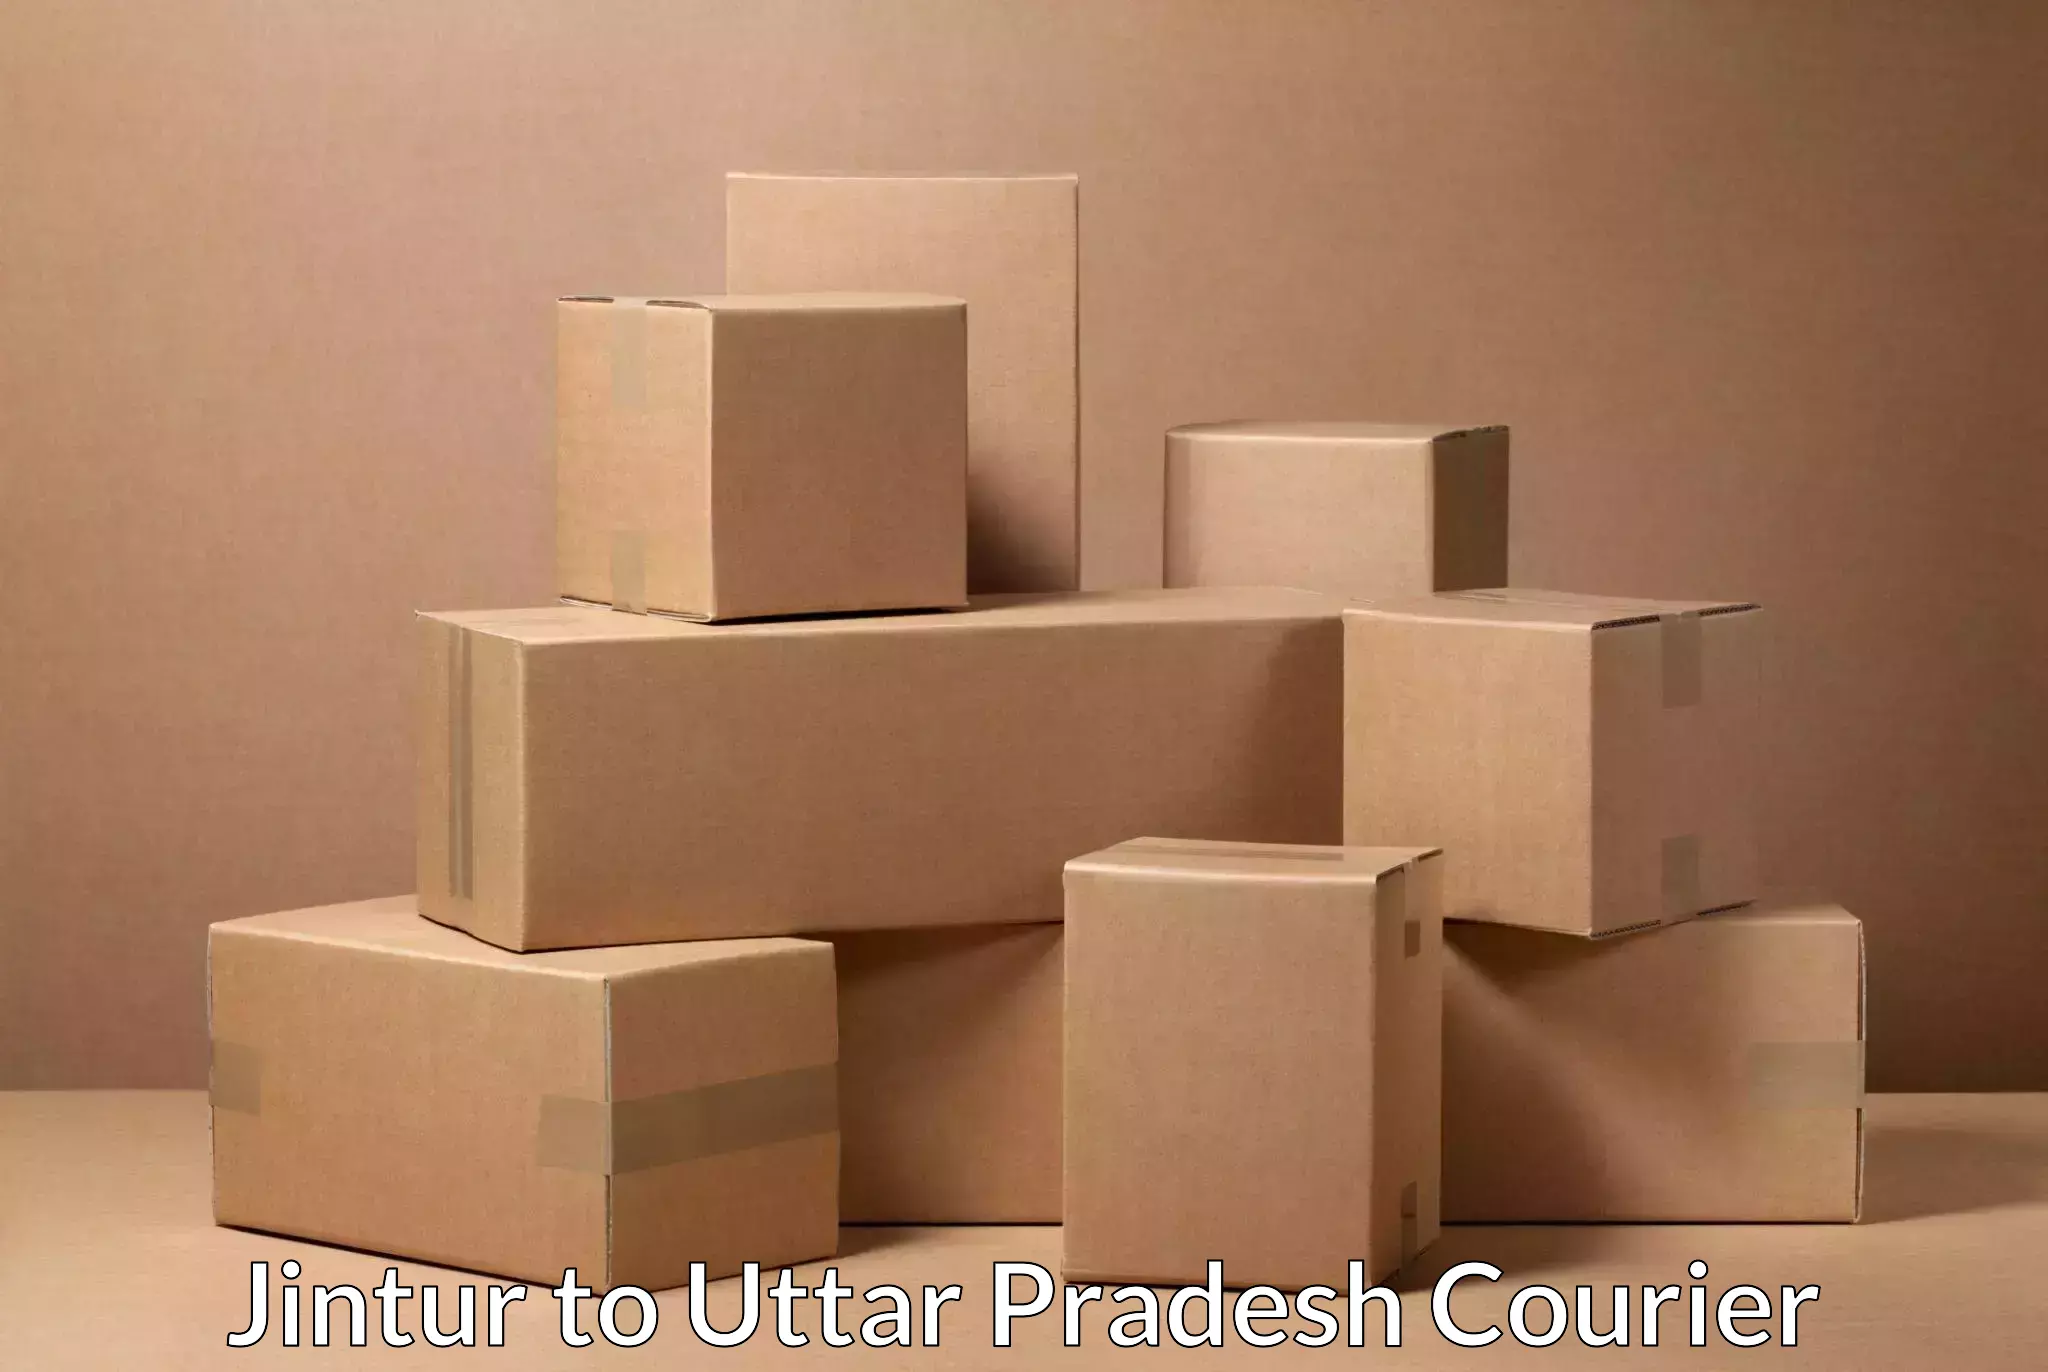 User-friendly courier app Jintur to Uttar Pradesh